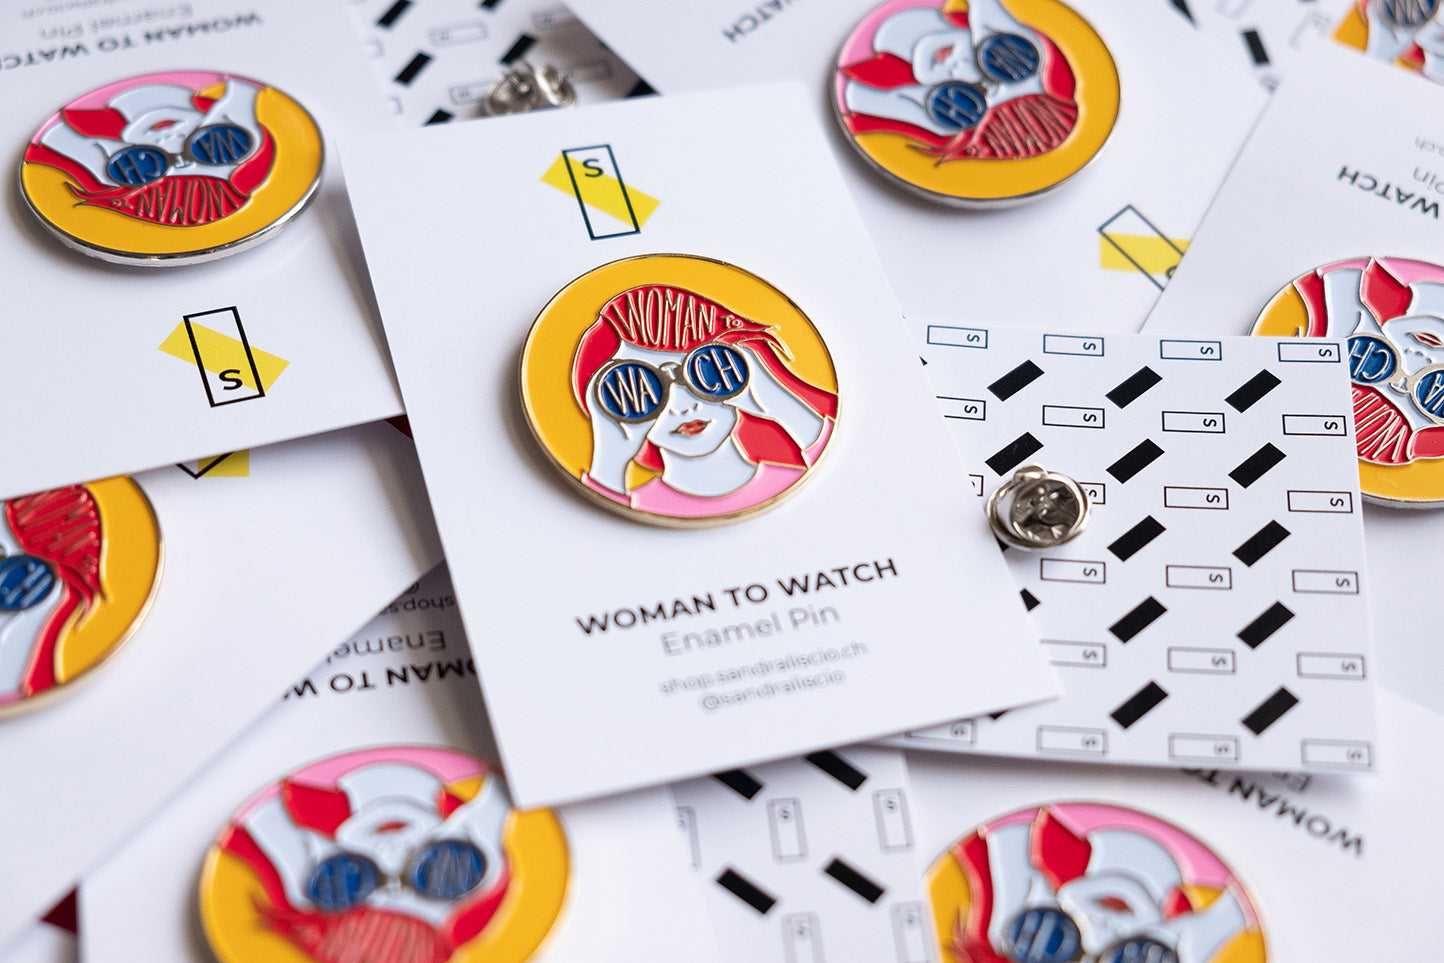 Woman to Watch - Enamel Pin